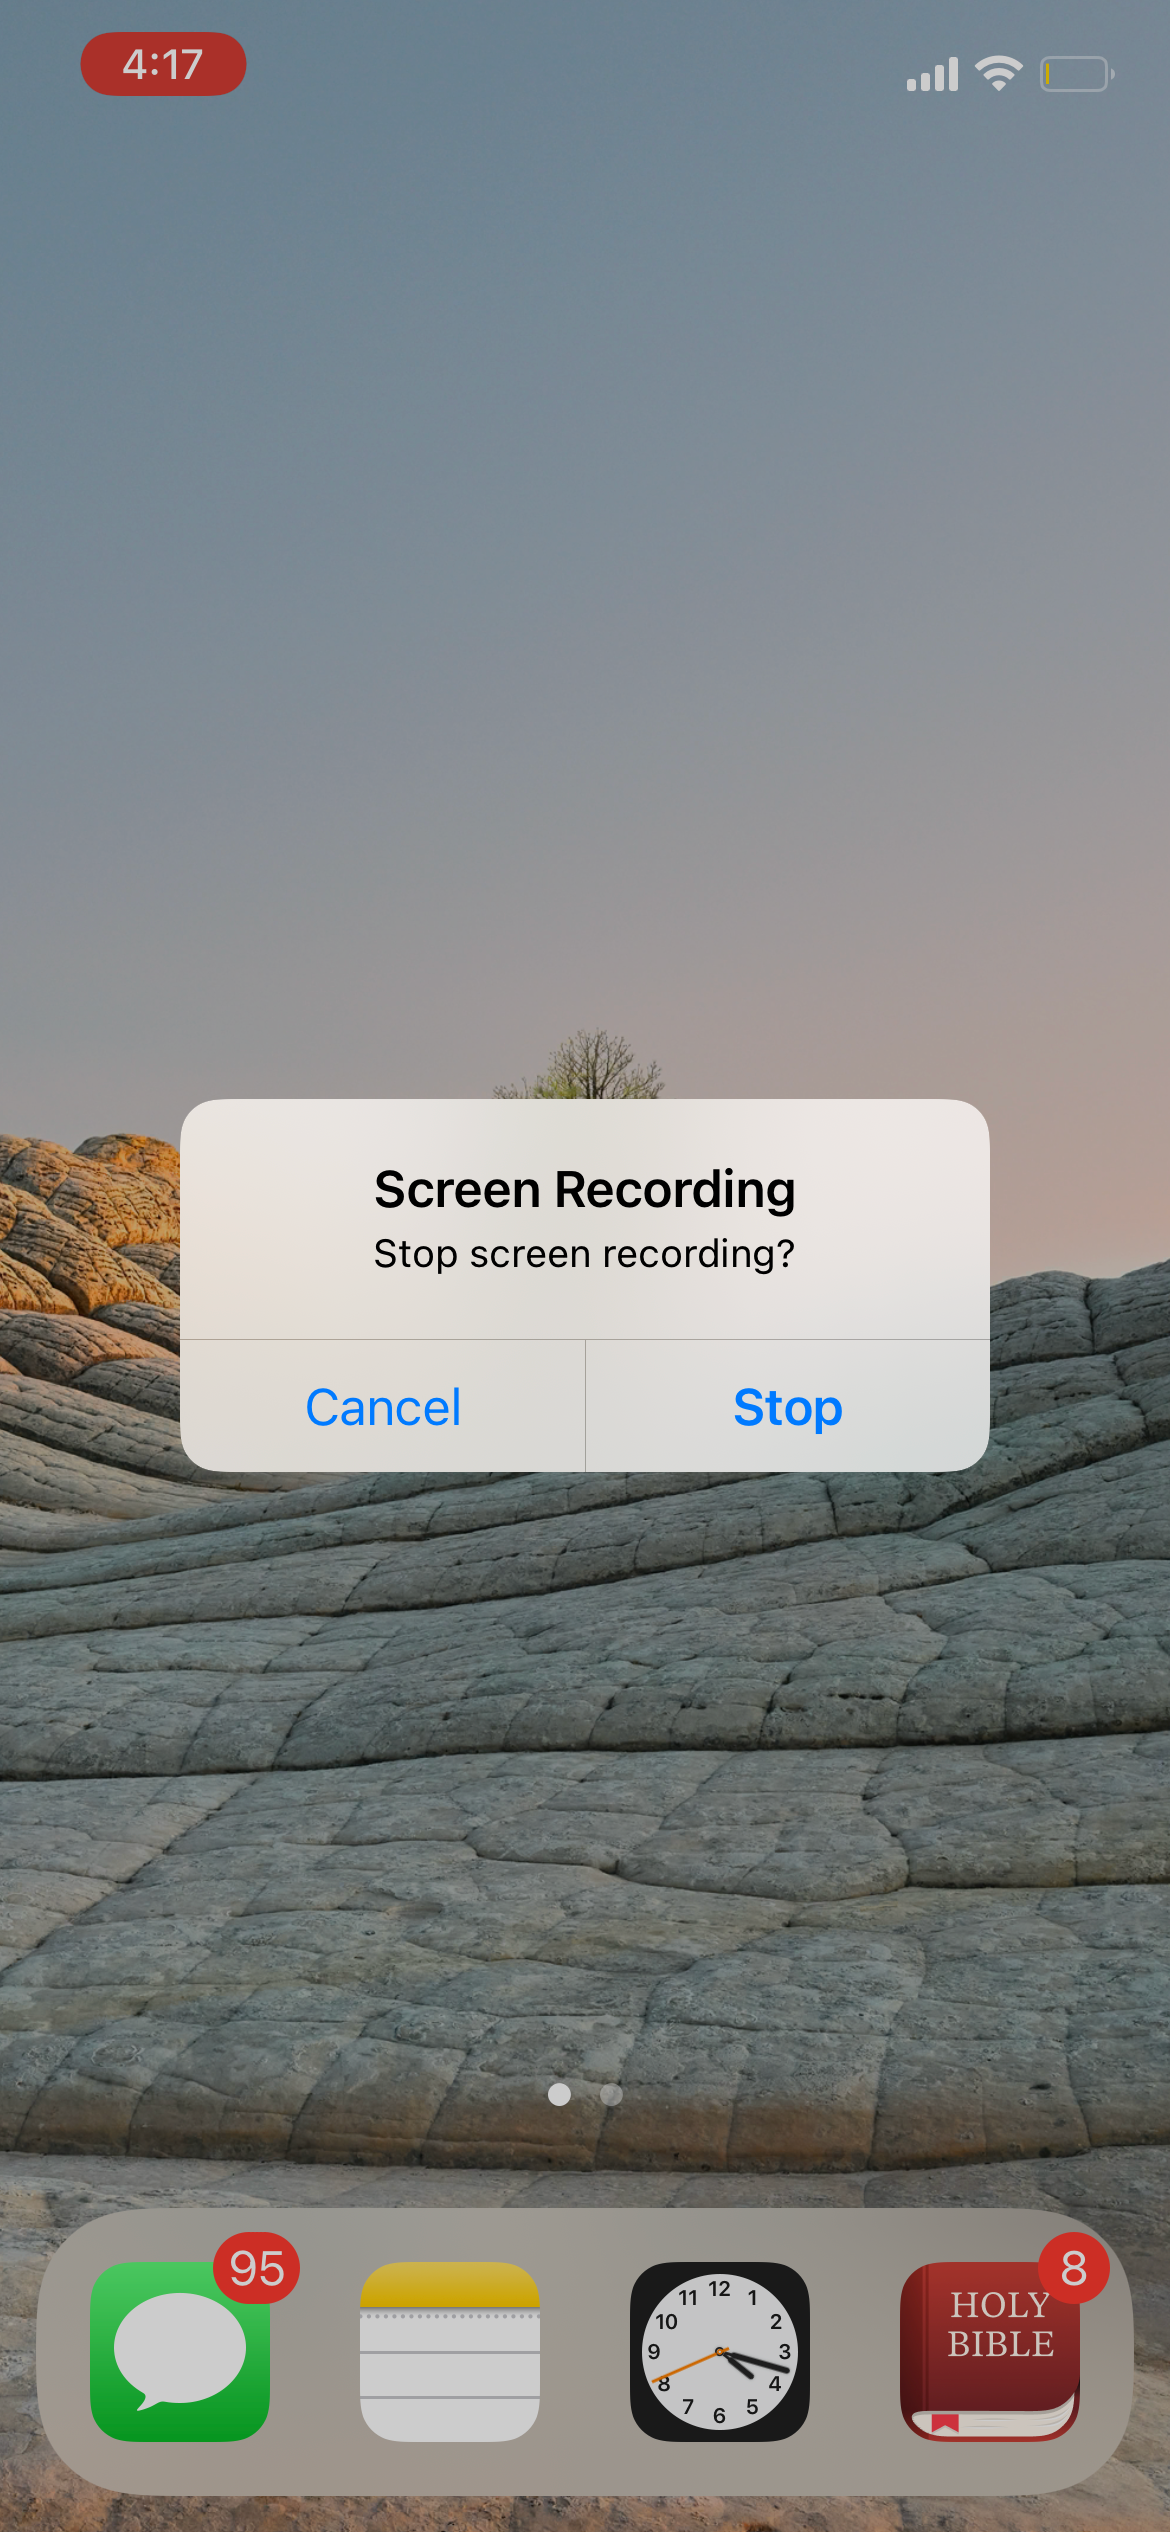 Screen Recording Stop Prompt